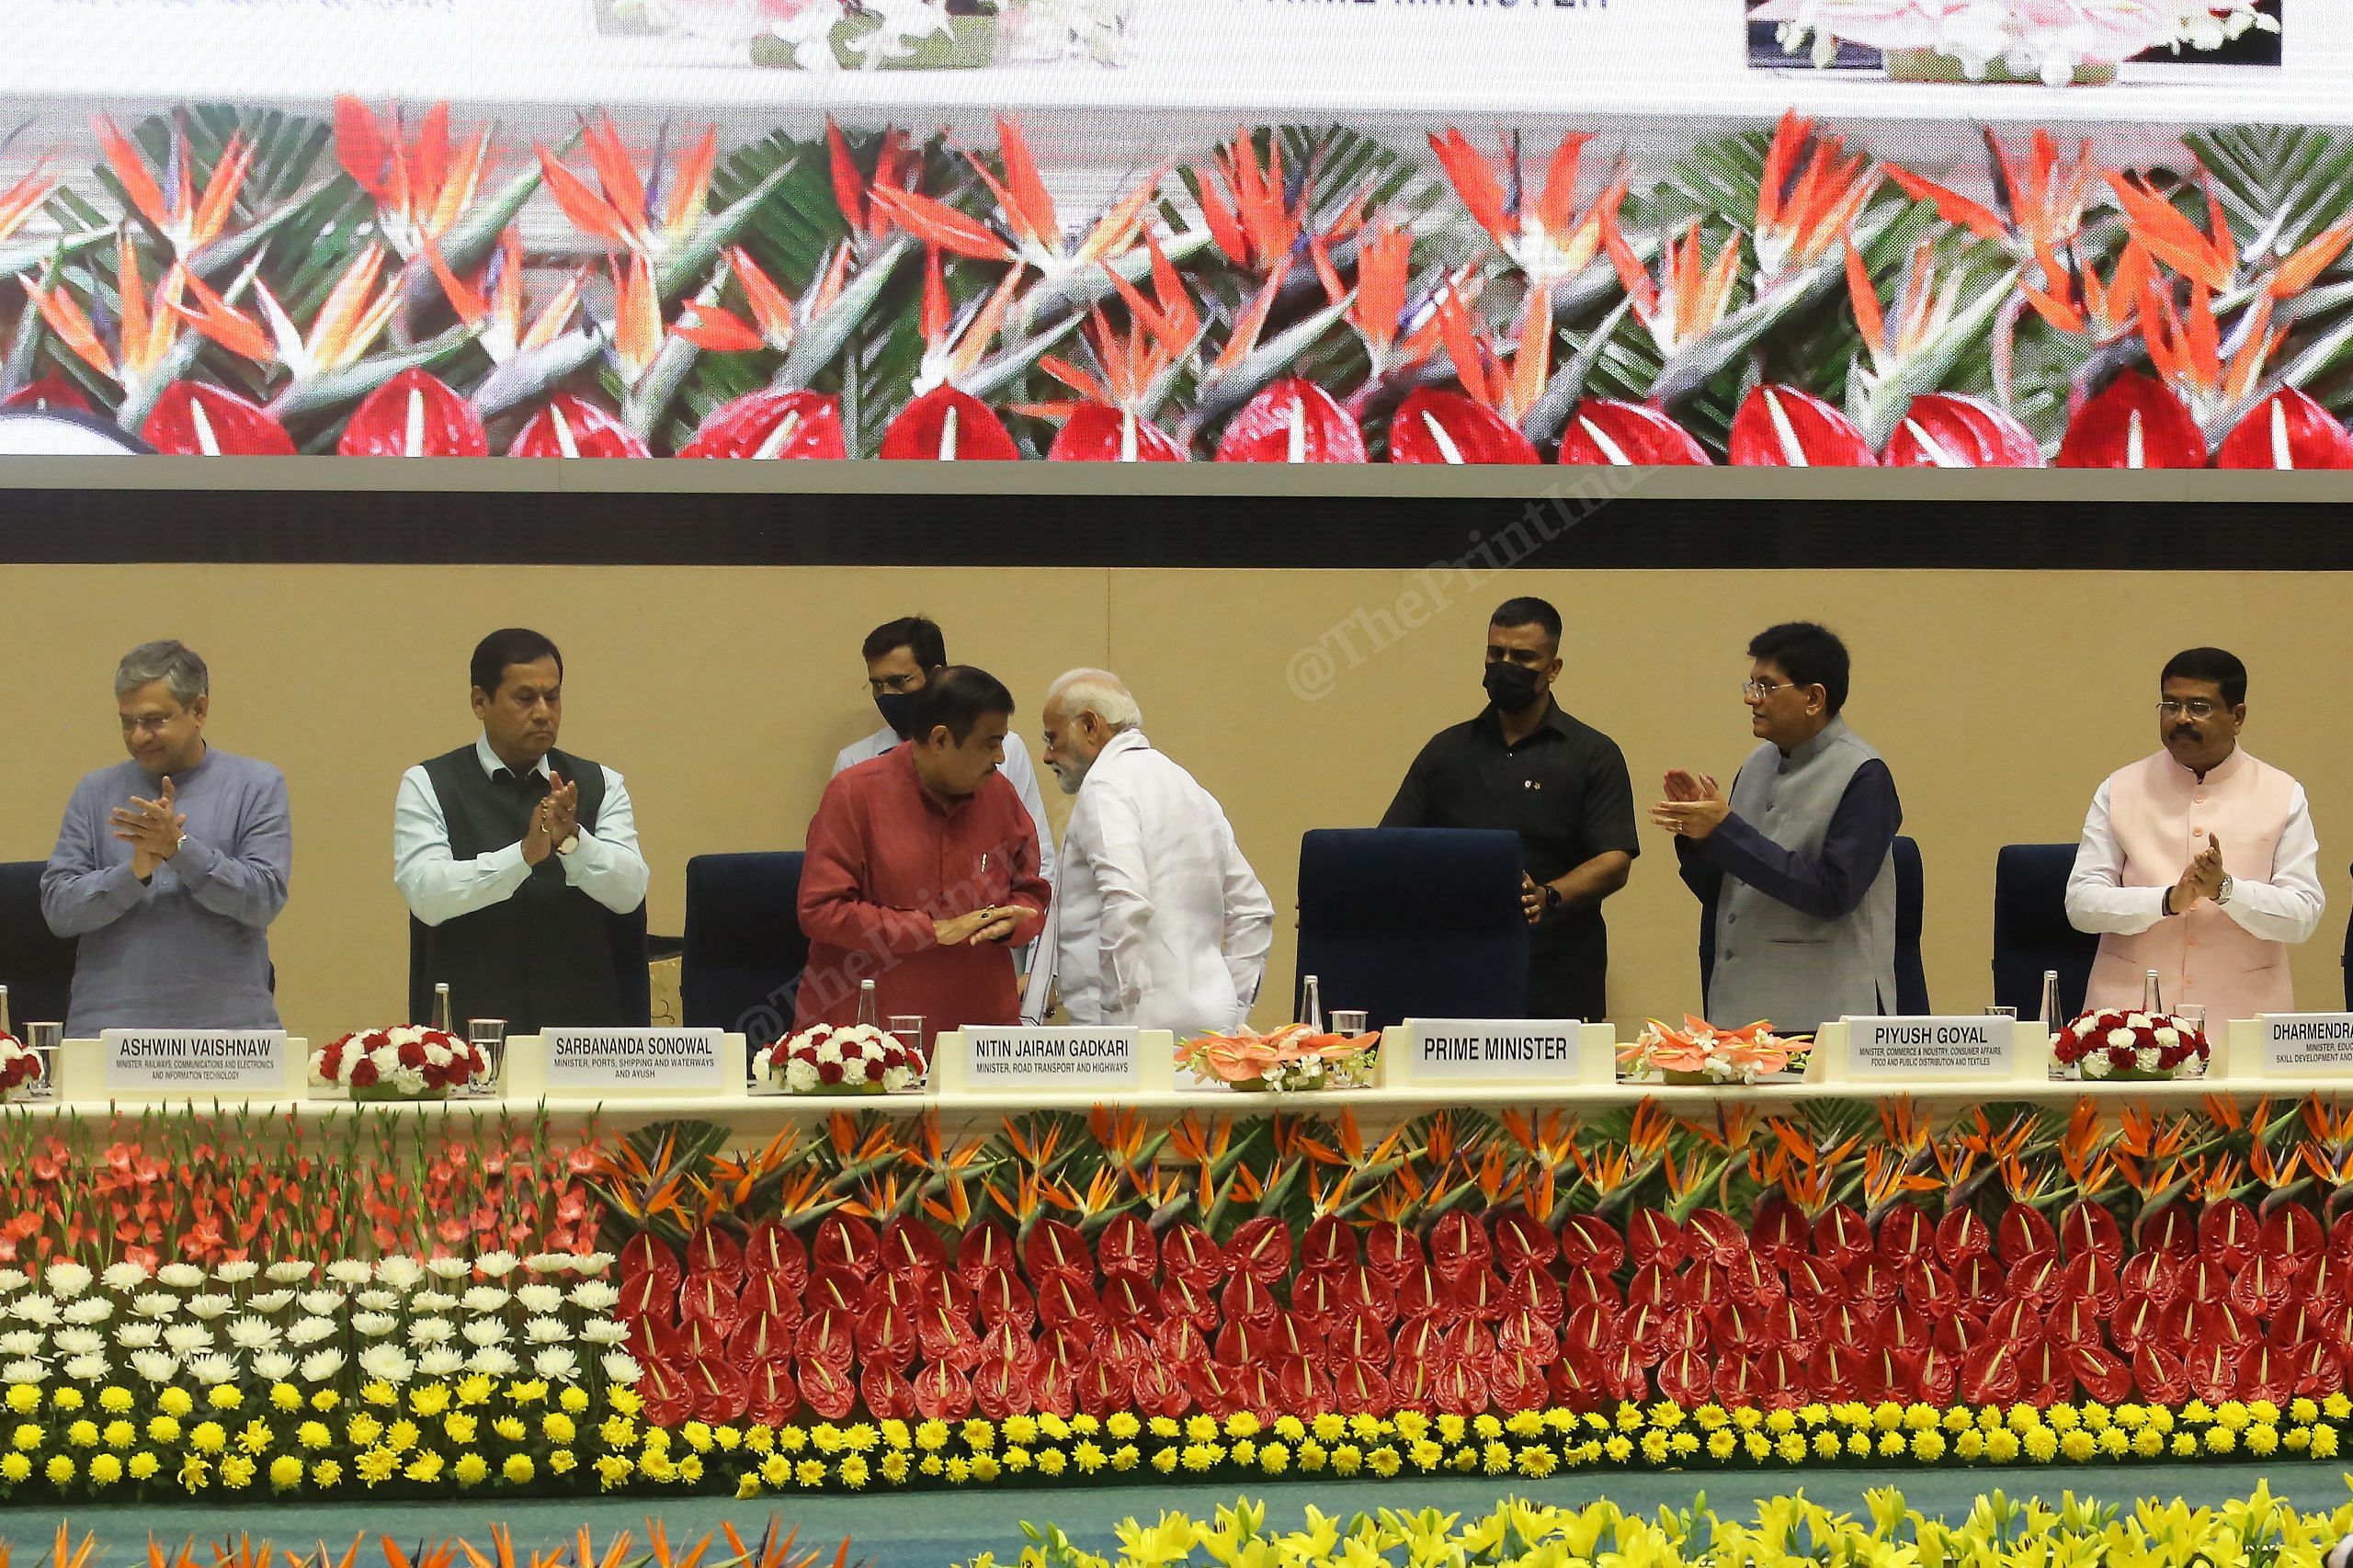 PM Narendra Modi before his speech at the event | Photo: Praveen Jain | ThePrint